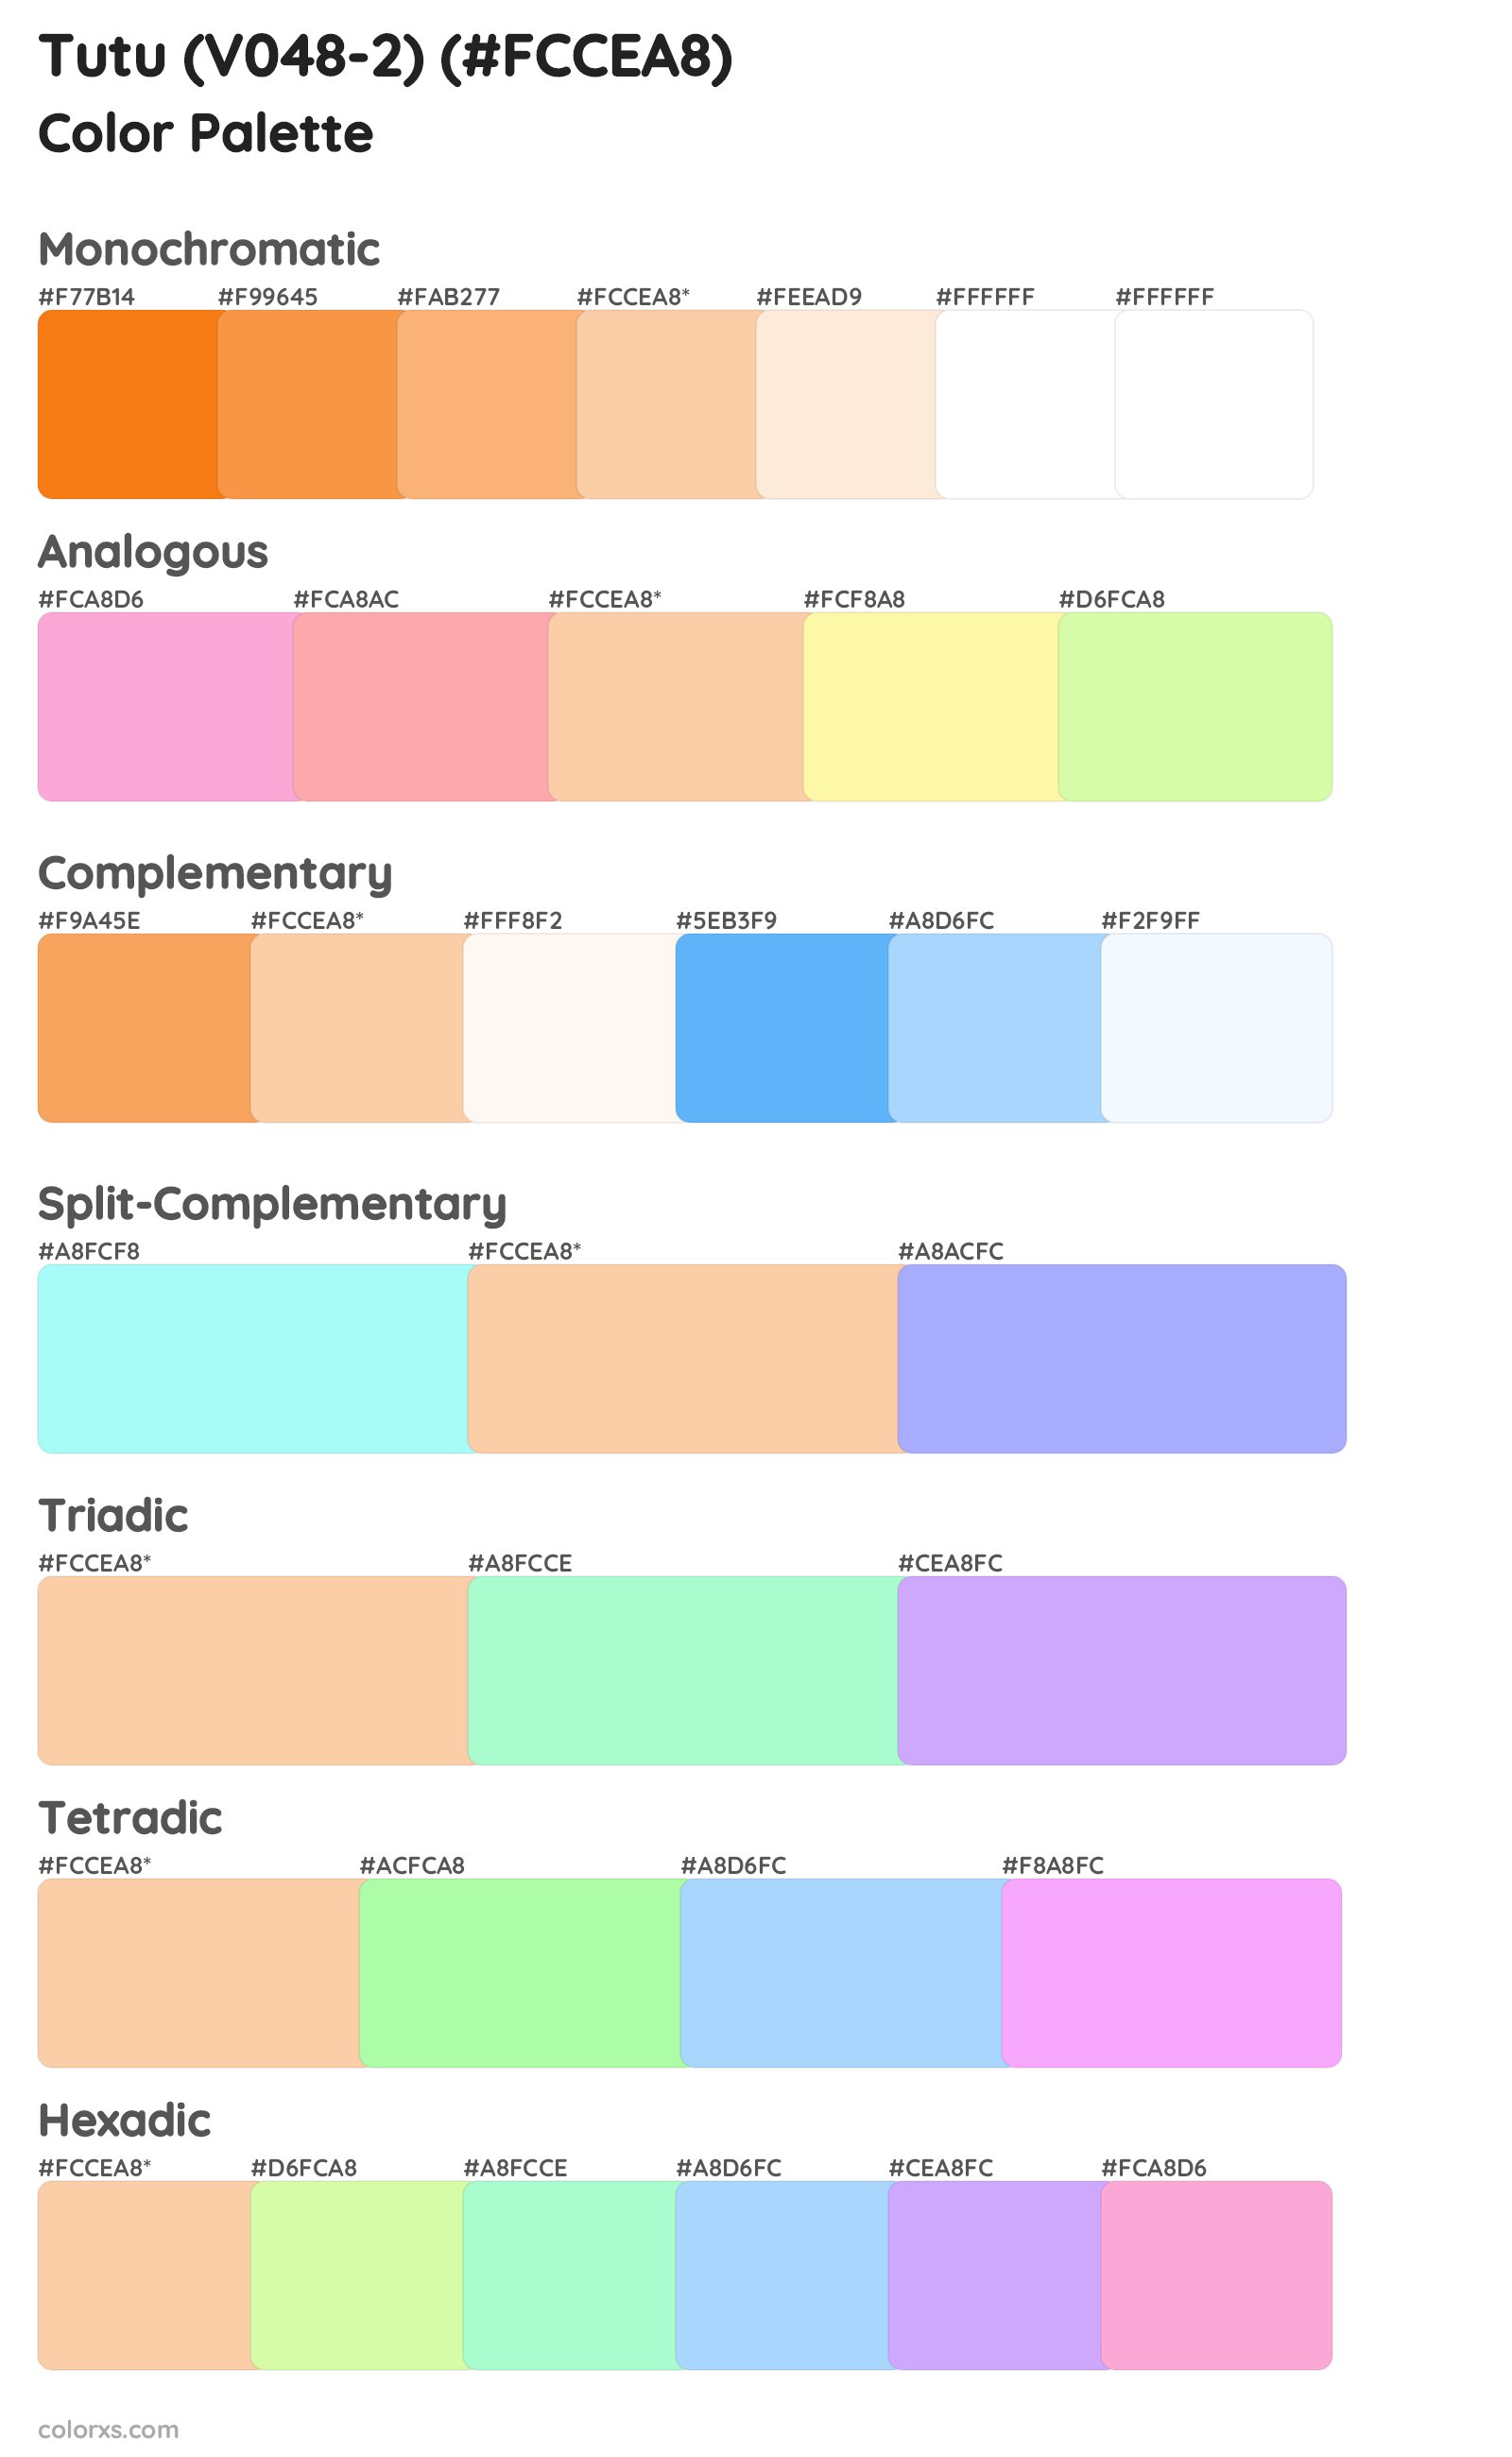 Tutu (V048-2) Color Scheme Palettes